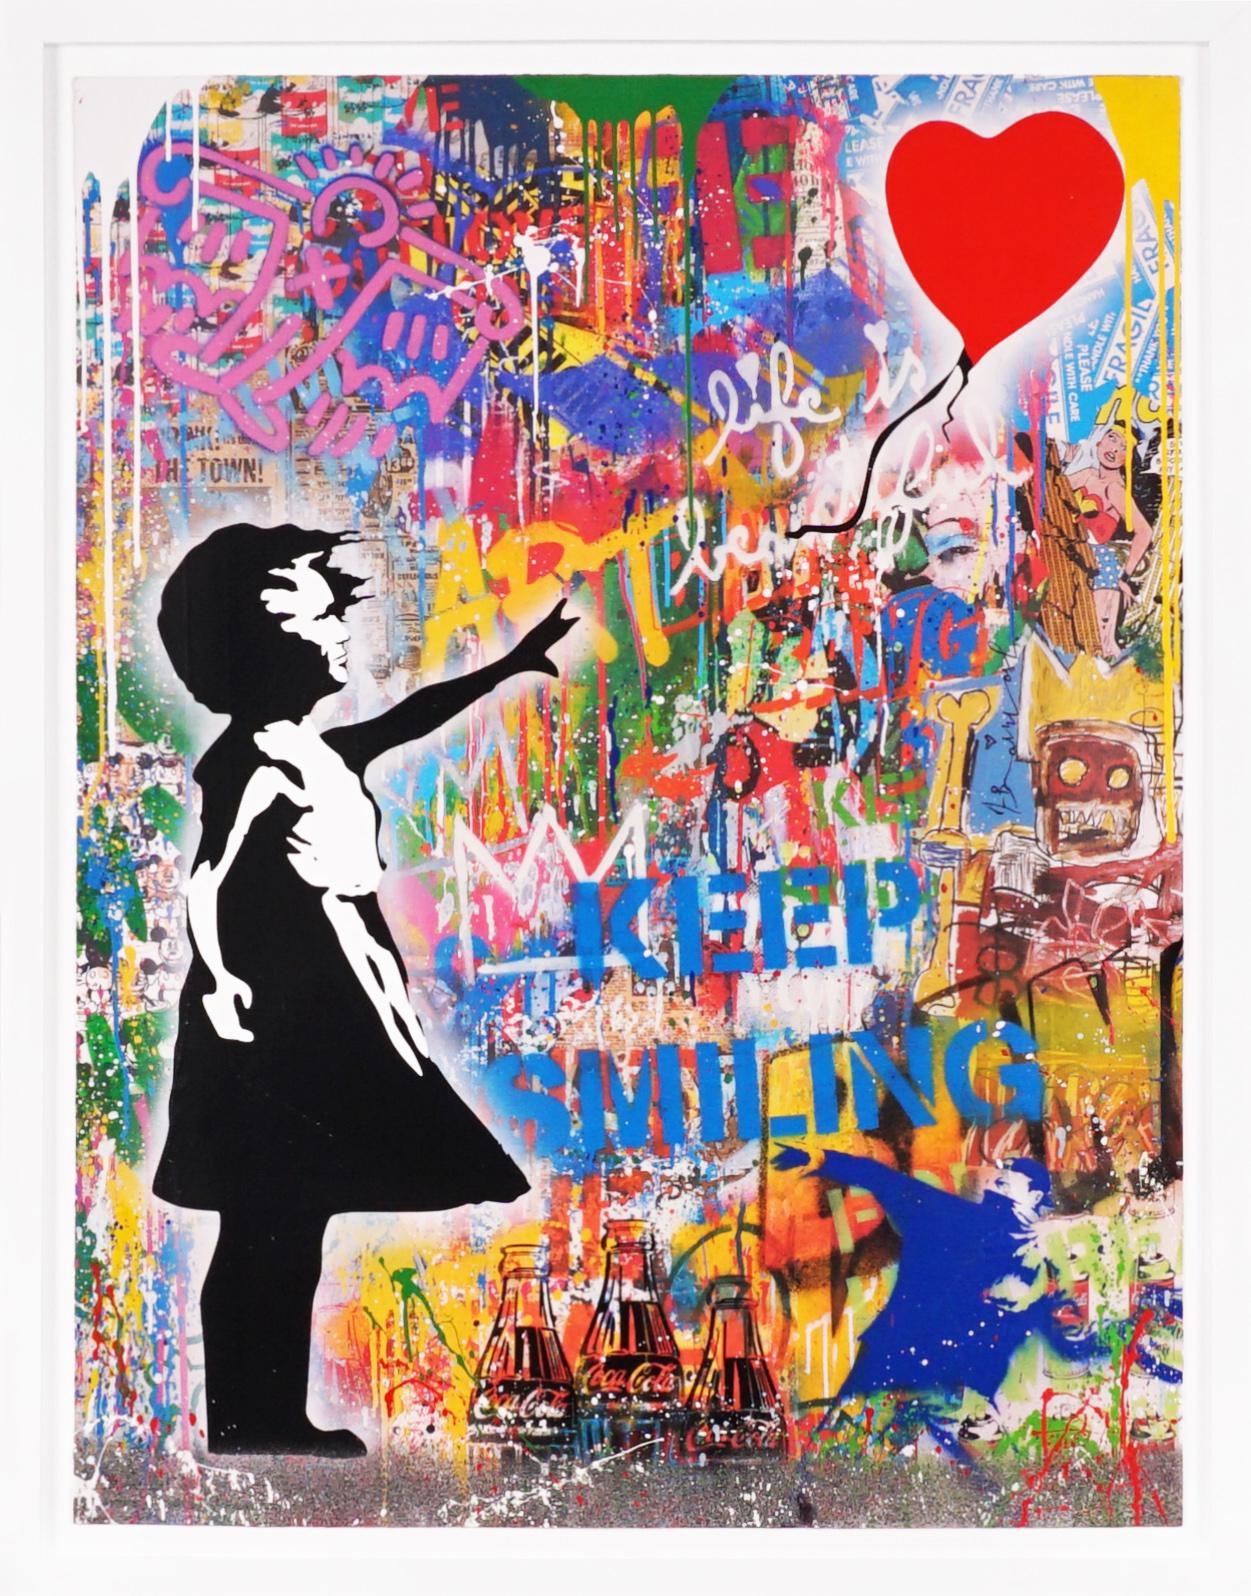 Mr. Brainwash Abstract Painting - 'Balloon Girl' Street Pop Art Painting, Unique, 2021